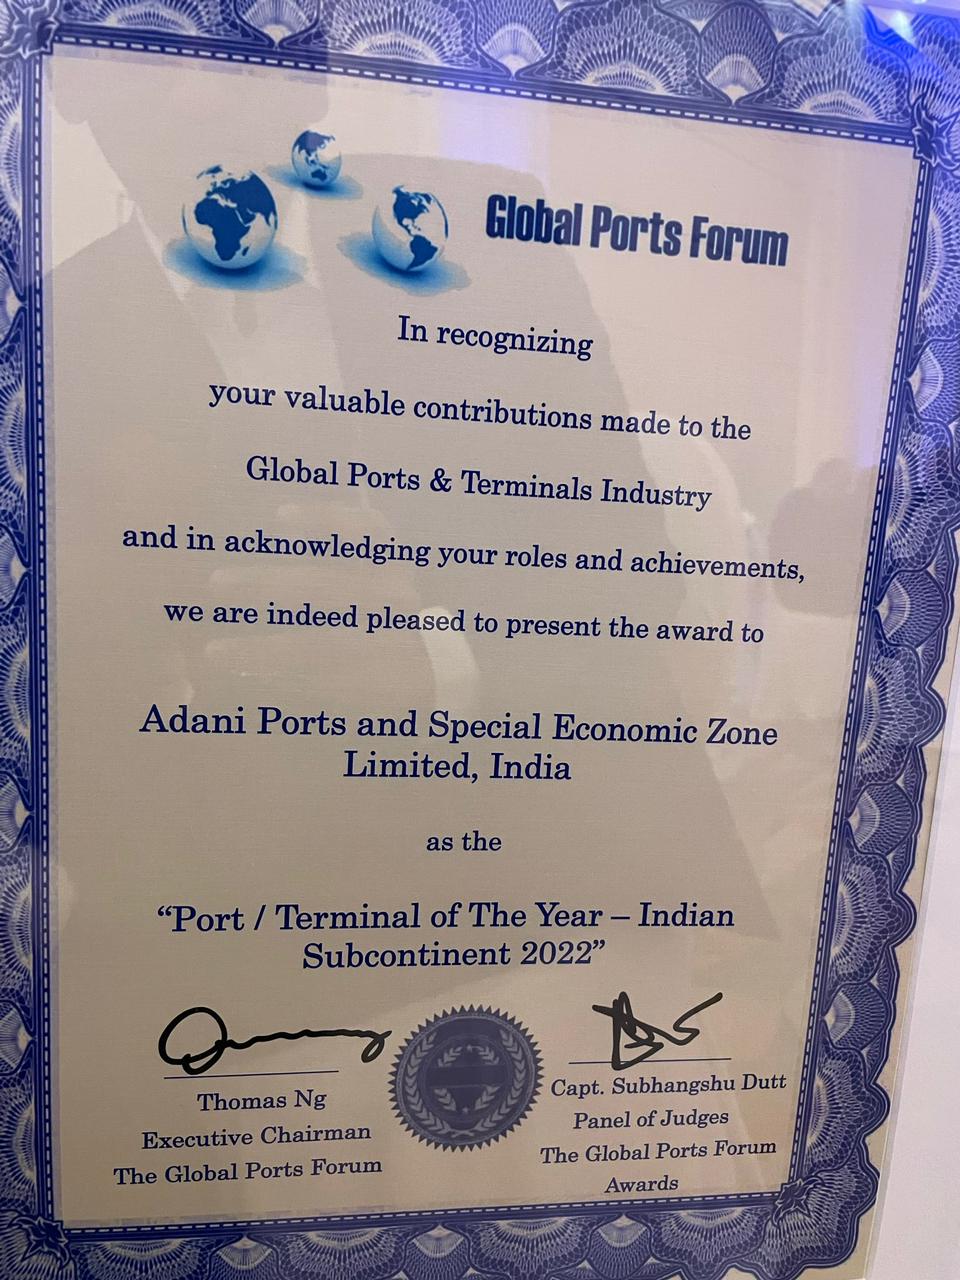 Adani Ports and SEZ Ltd bags honour at Global Ports Forum